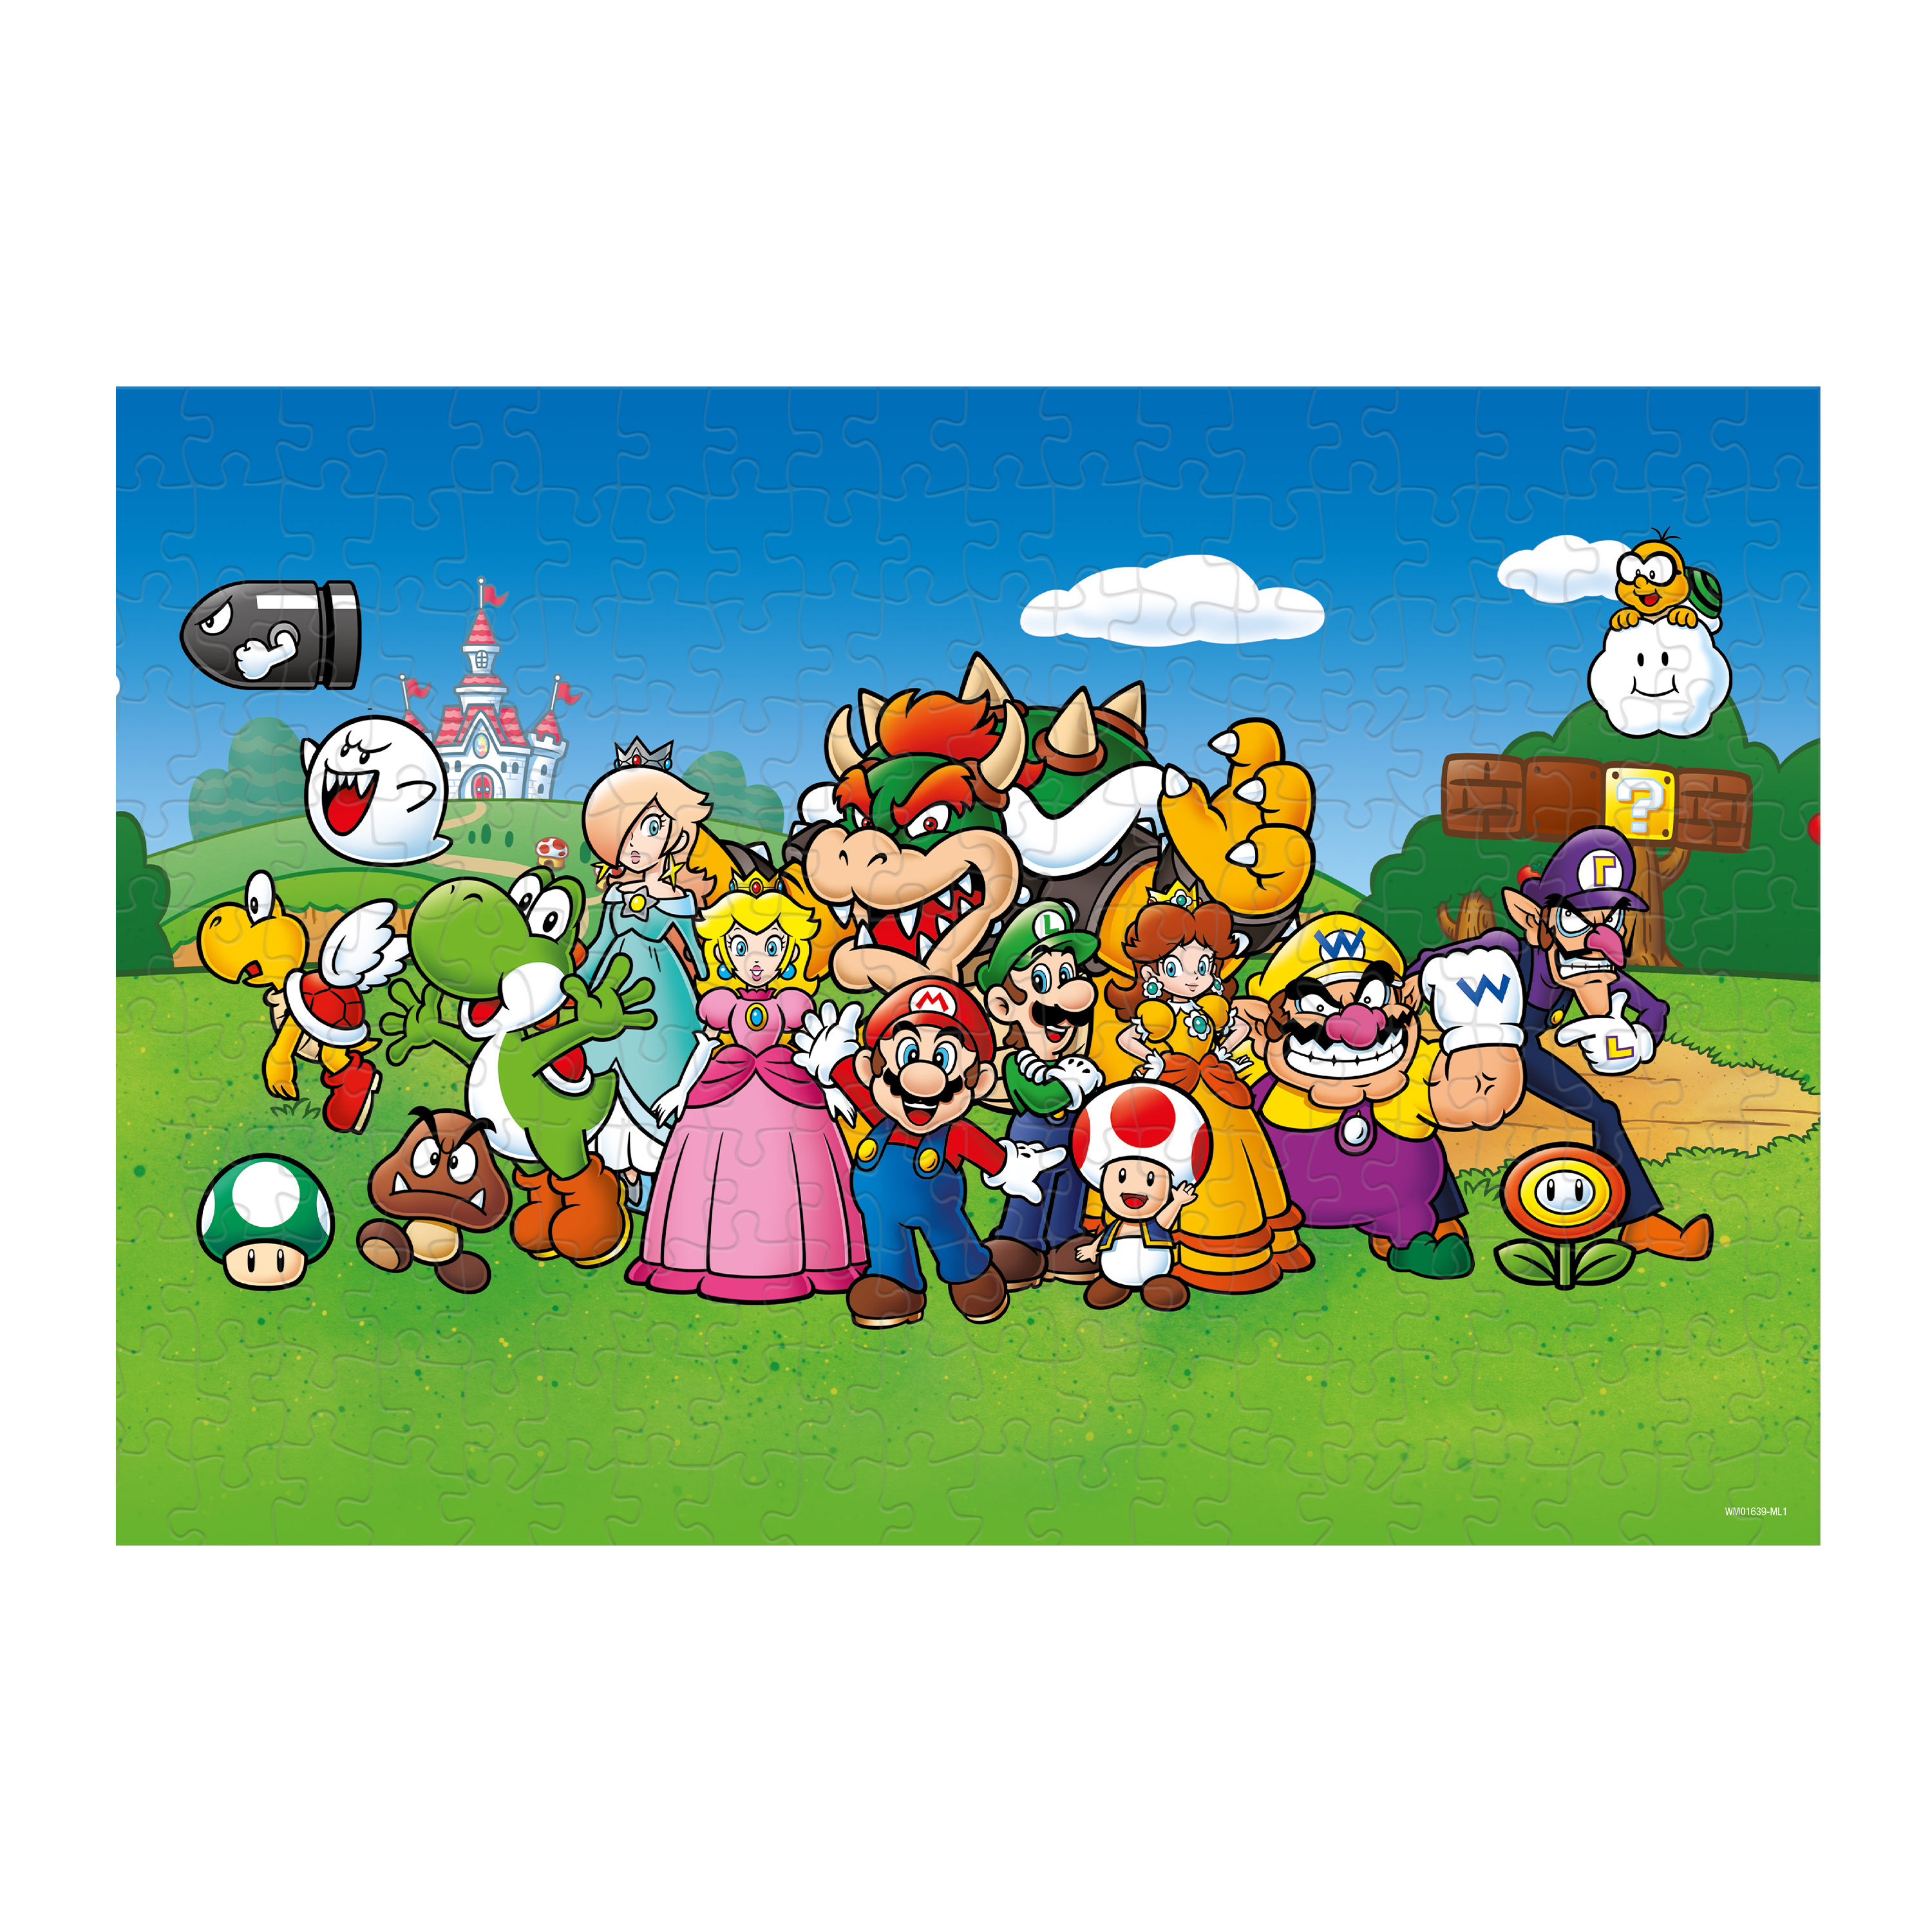 Puzzle Super Mario a priatelia 500 Winning Moves